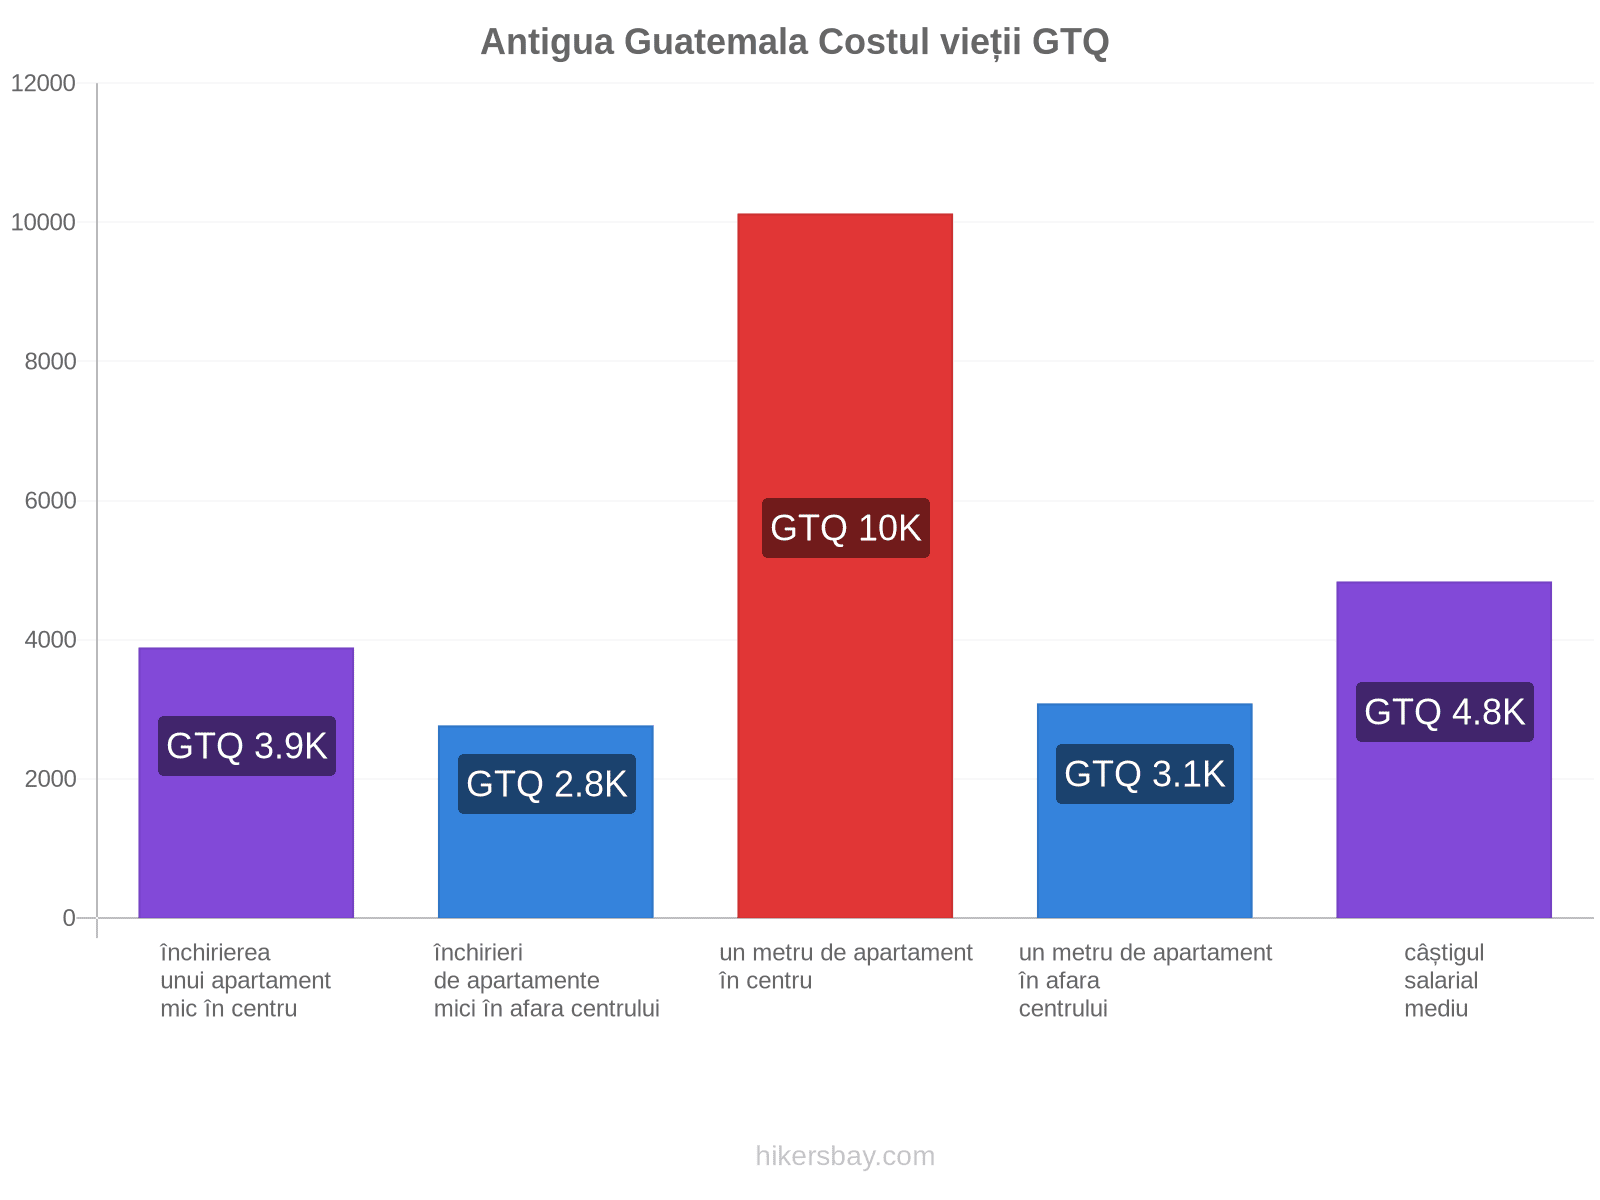 Antigua Guatemala costul vieții hikersbay.com